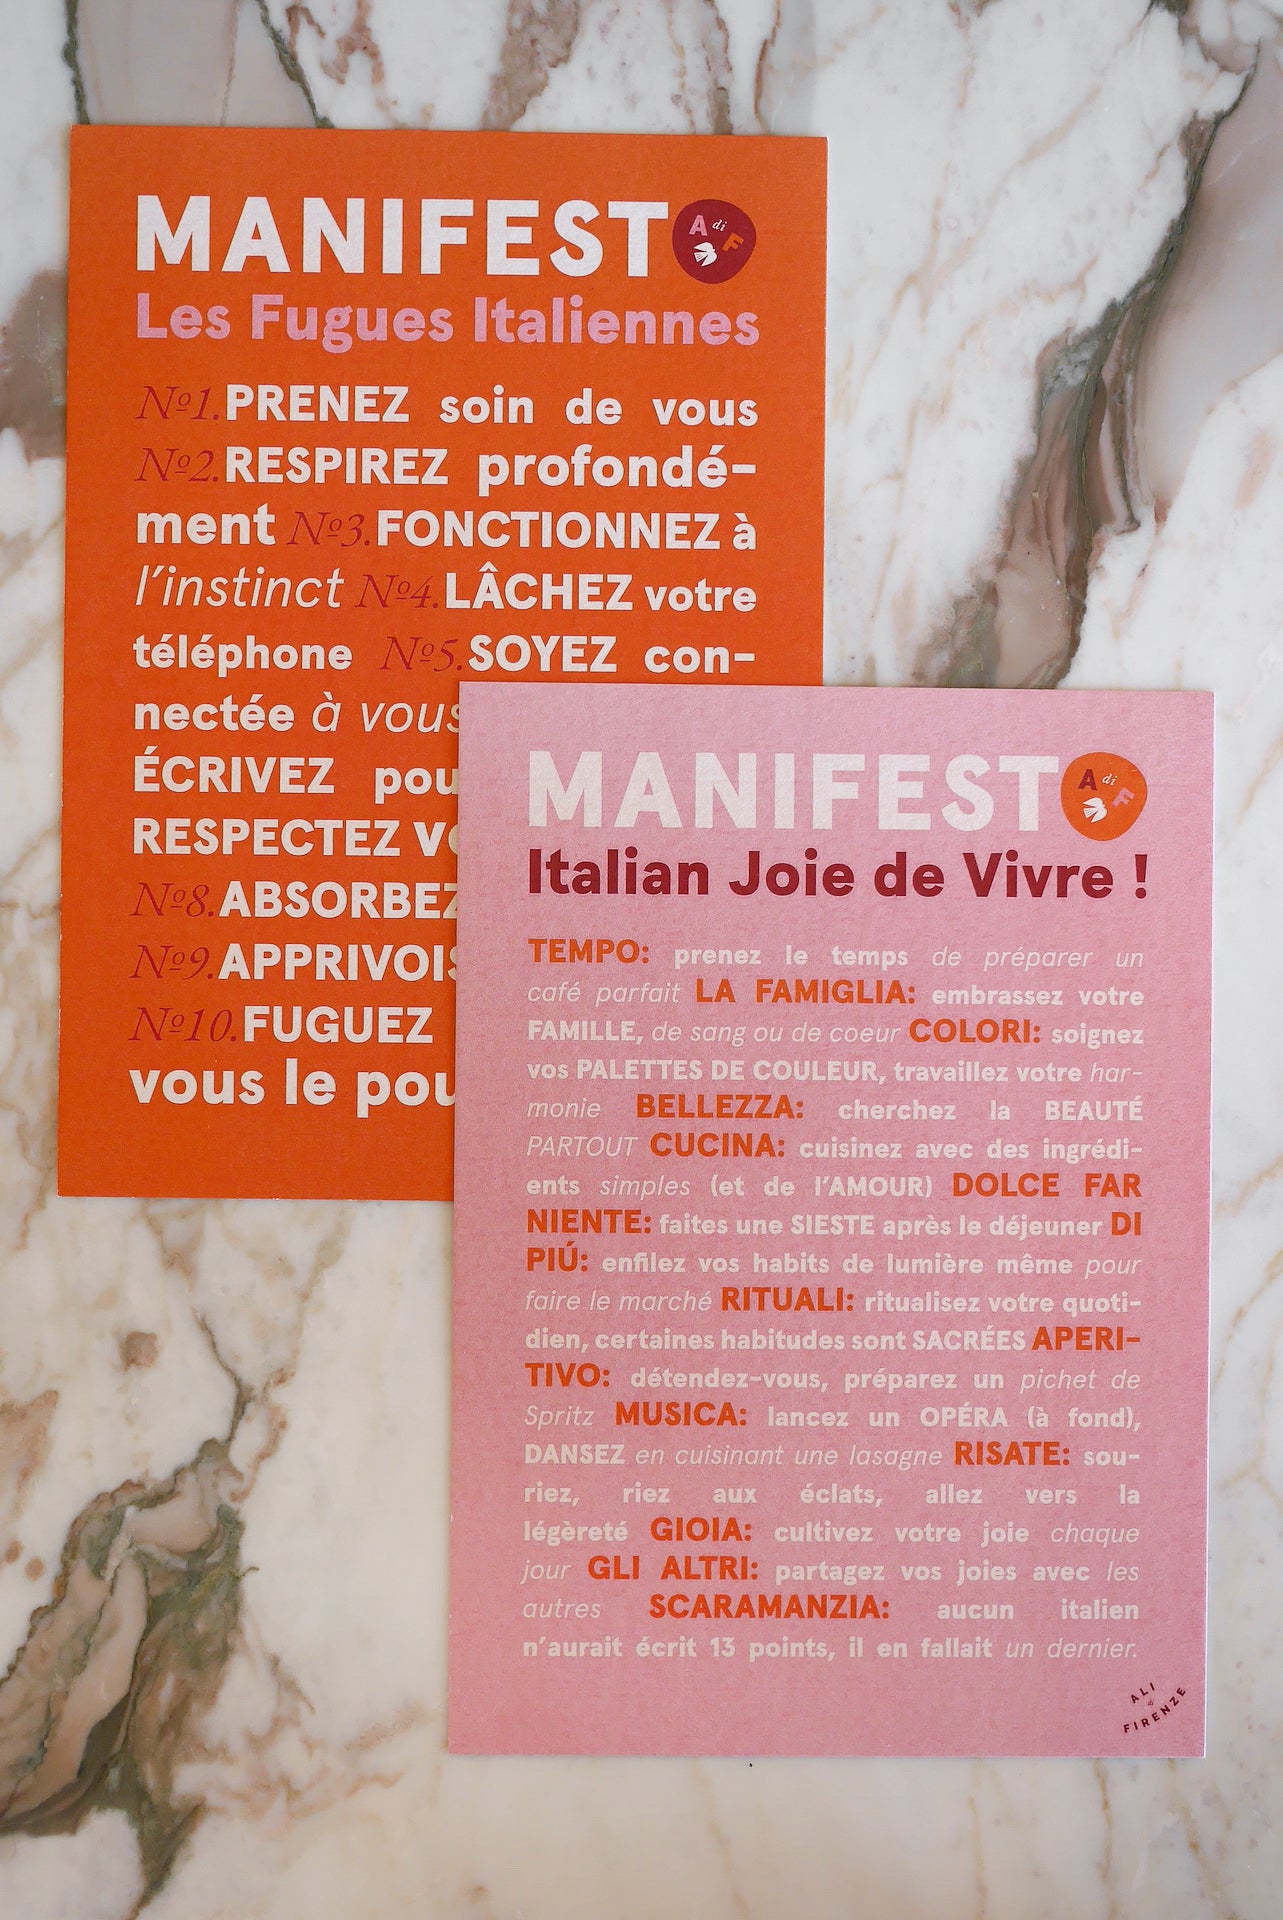 Manifesto "Italian Joie de Vivre!" – Ali di Firenze